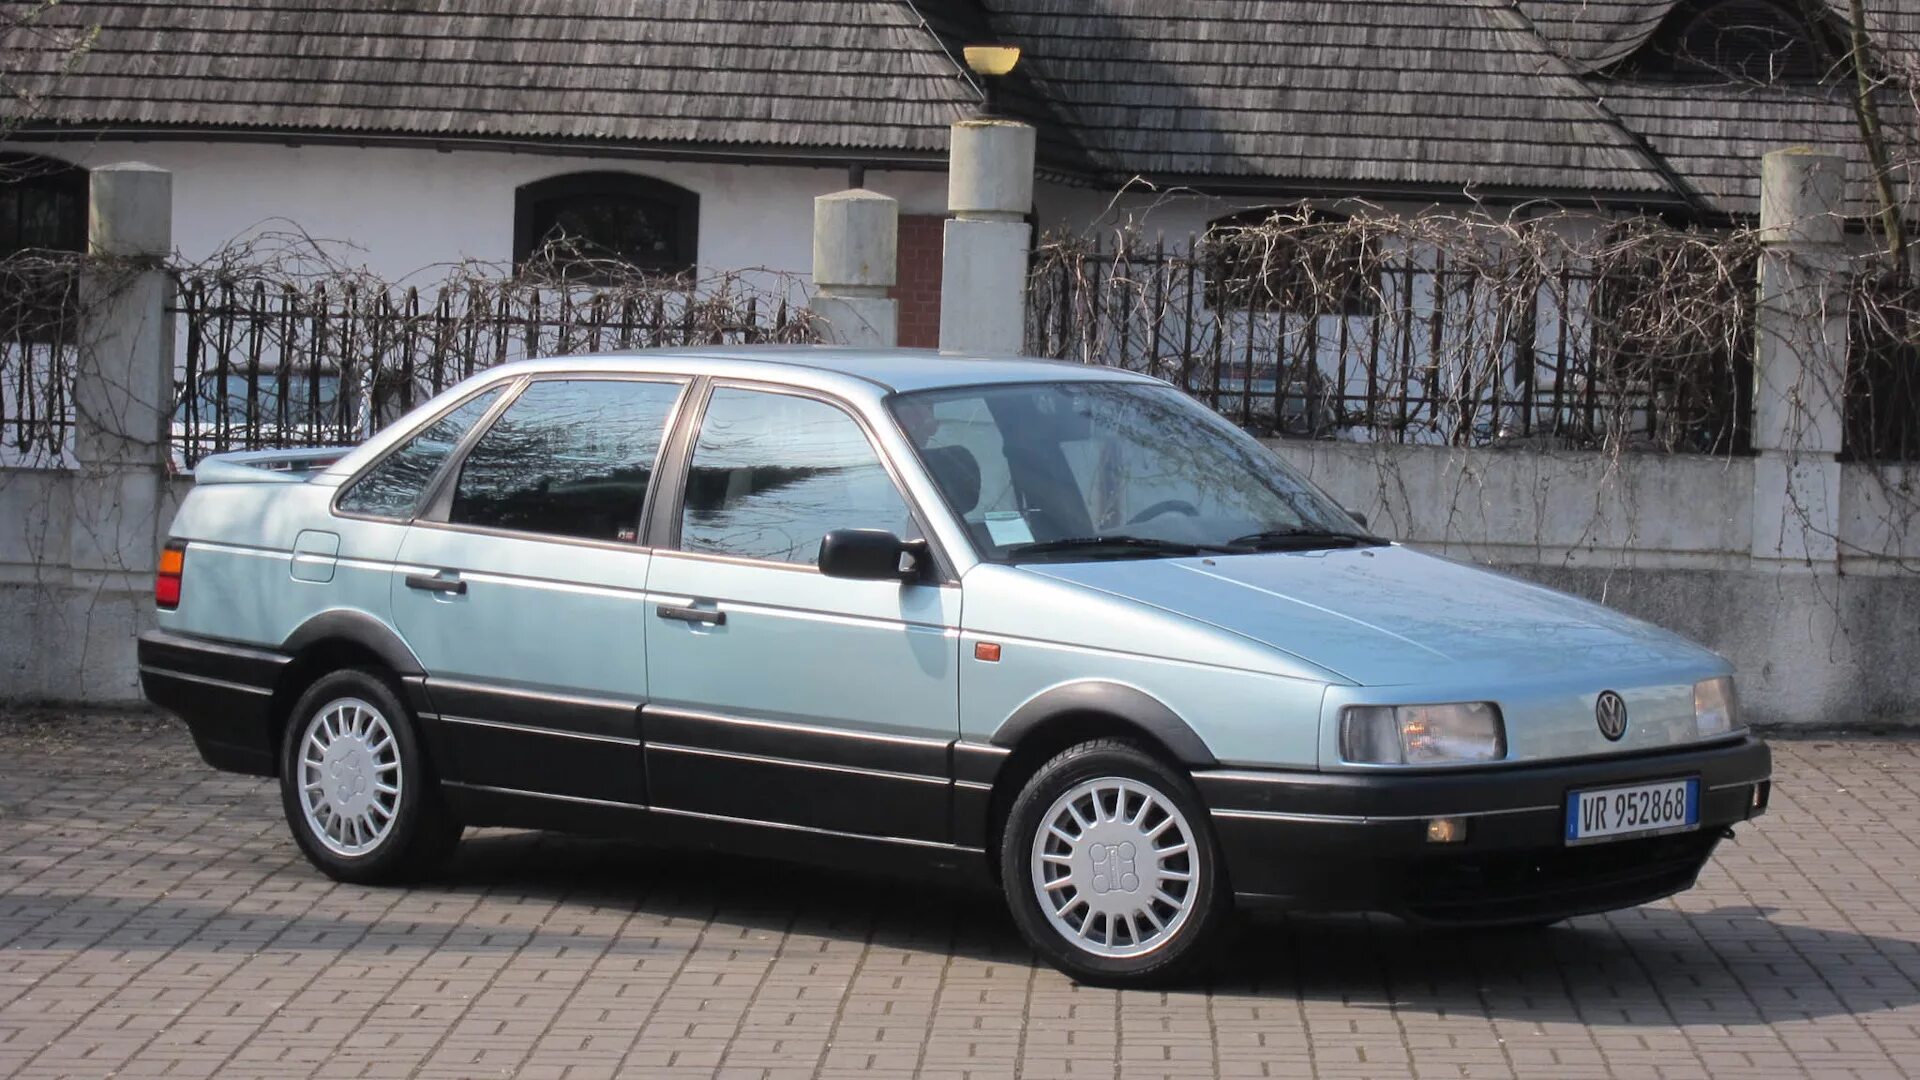 VW Passat b3 gl. Volkswagen Passat b3 седан. Volkswagen Пассат b3 1990. Фольксваген Пассат б3 gt. Машину фольксваген пассат б3